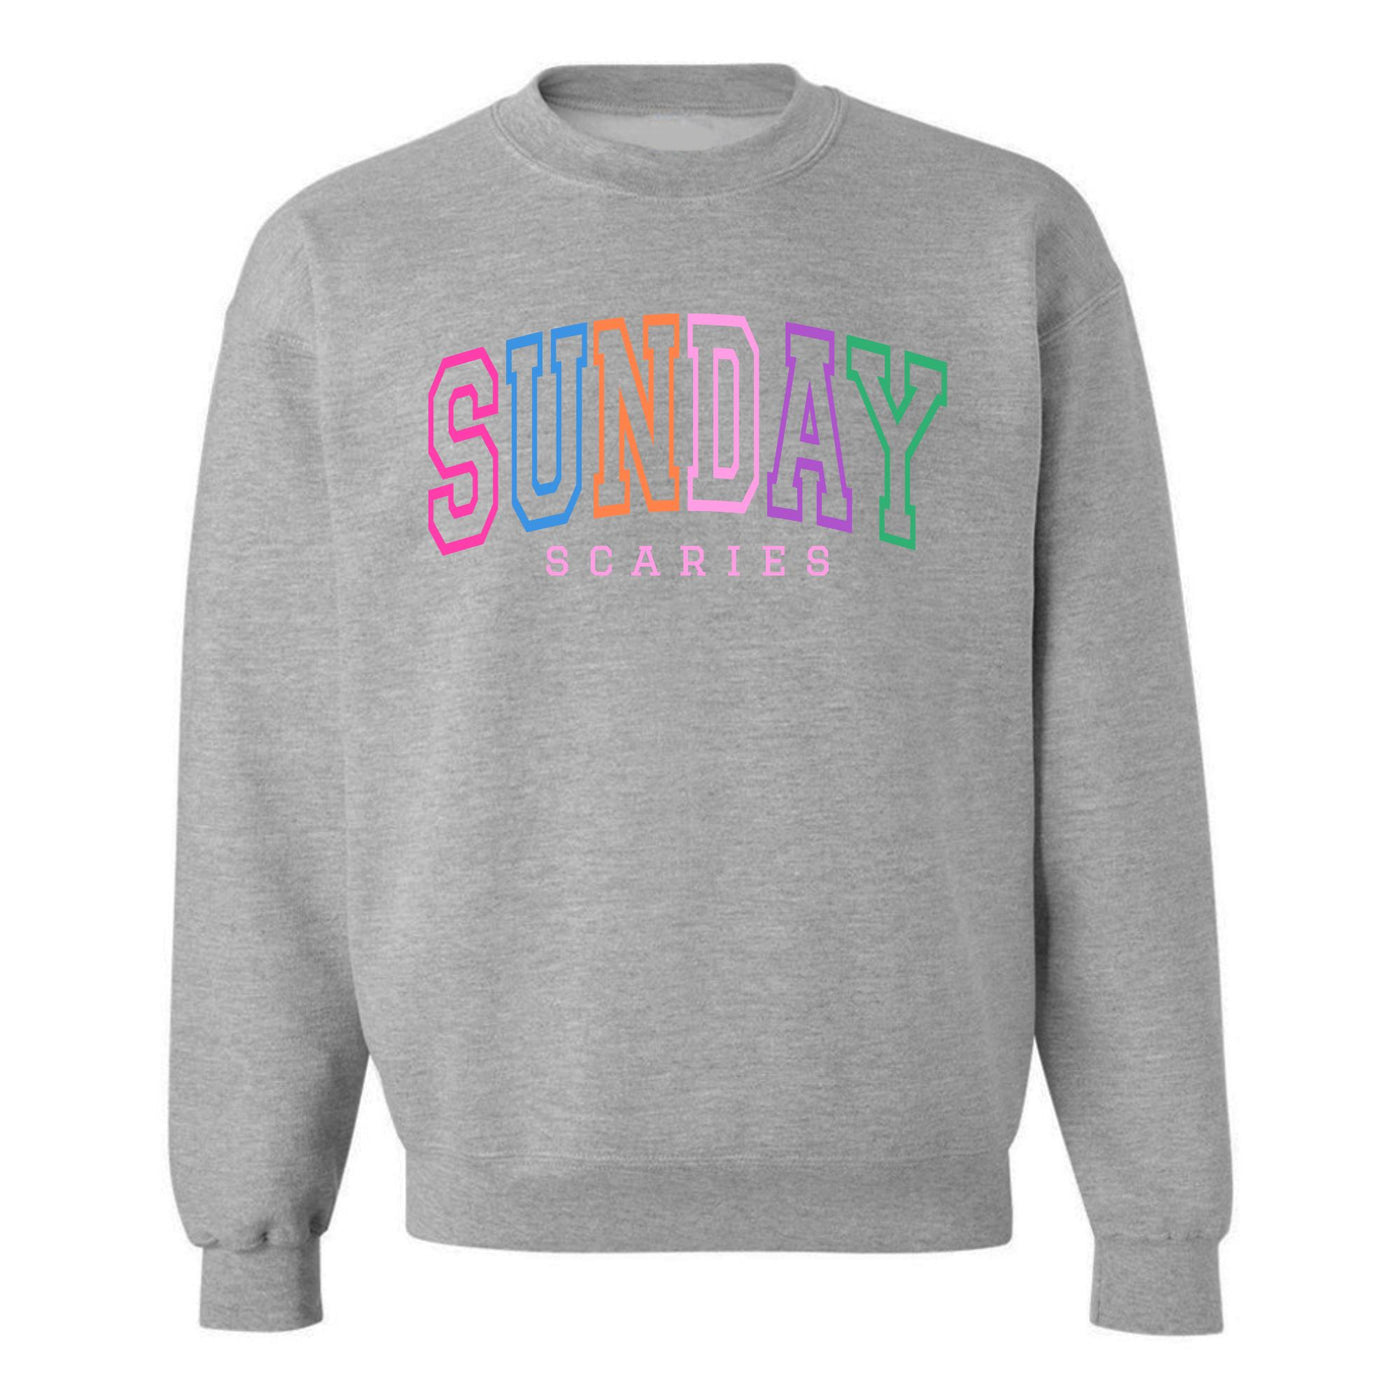 'Sunday Scaries' Crewneck Sweatshirt